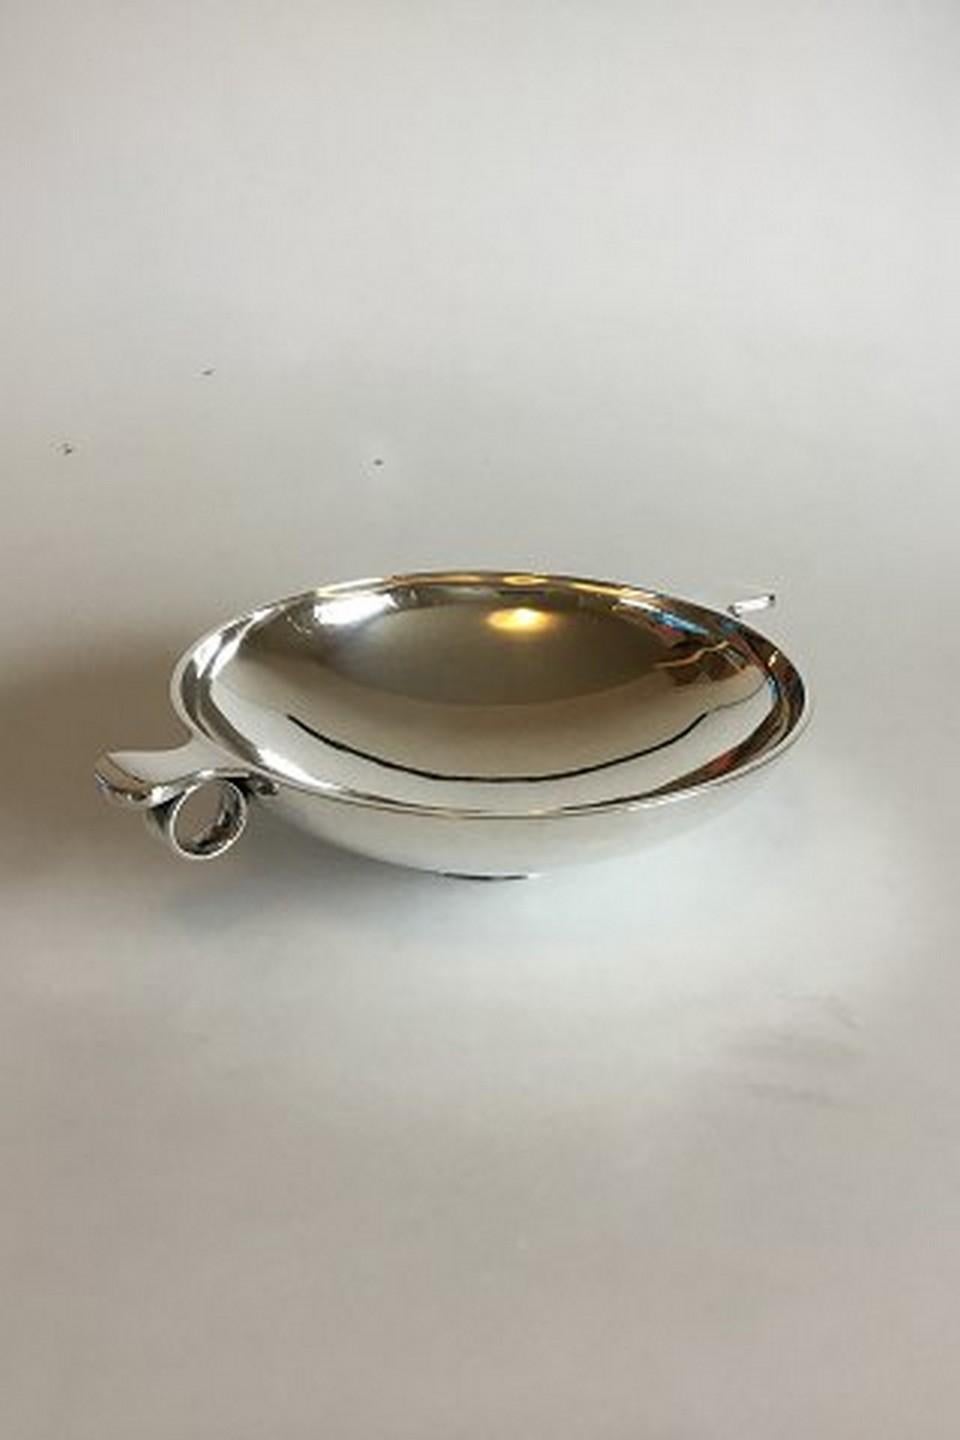 Georg Jensen sterling silver bowl no 544A. Designed by Gustav Pedersen. 
Measures 26 cm / 10 15/64 in. x 6 cm / 2 23/64 in. 
Weighs 516 g / 8.20 oz.
Item no.: 331923.